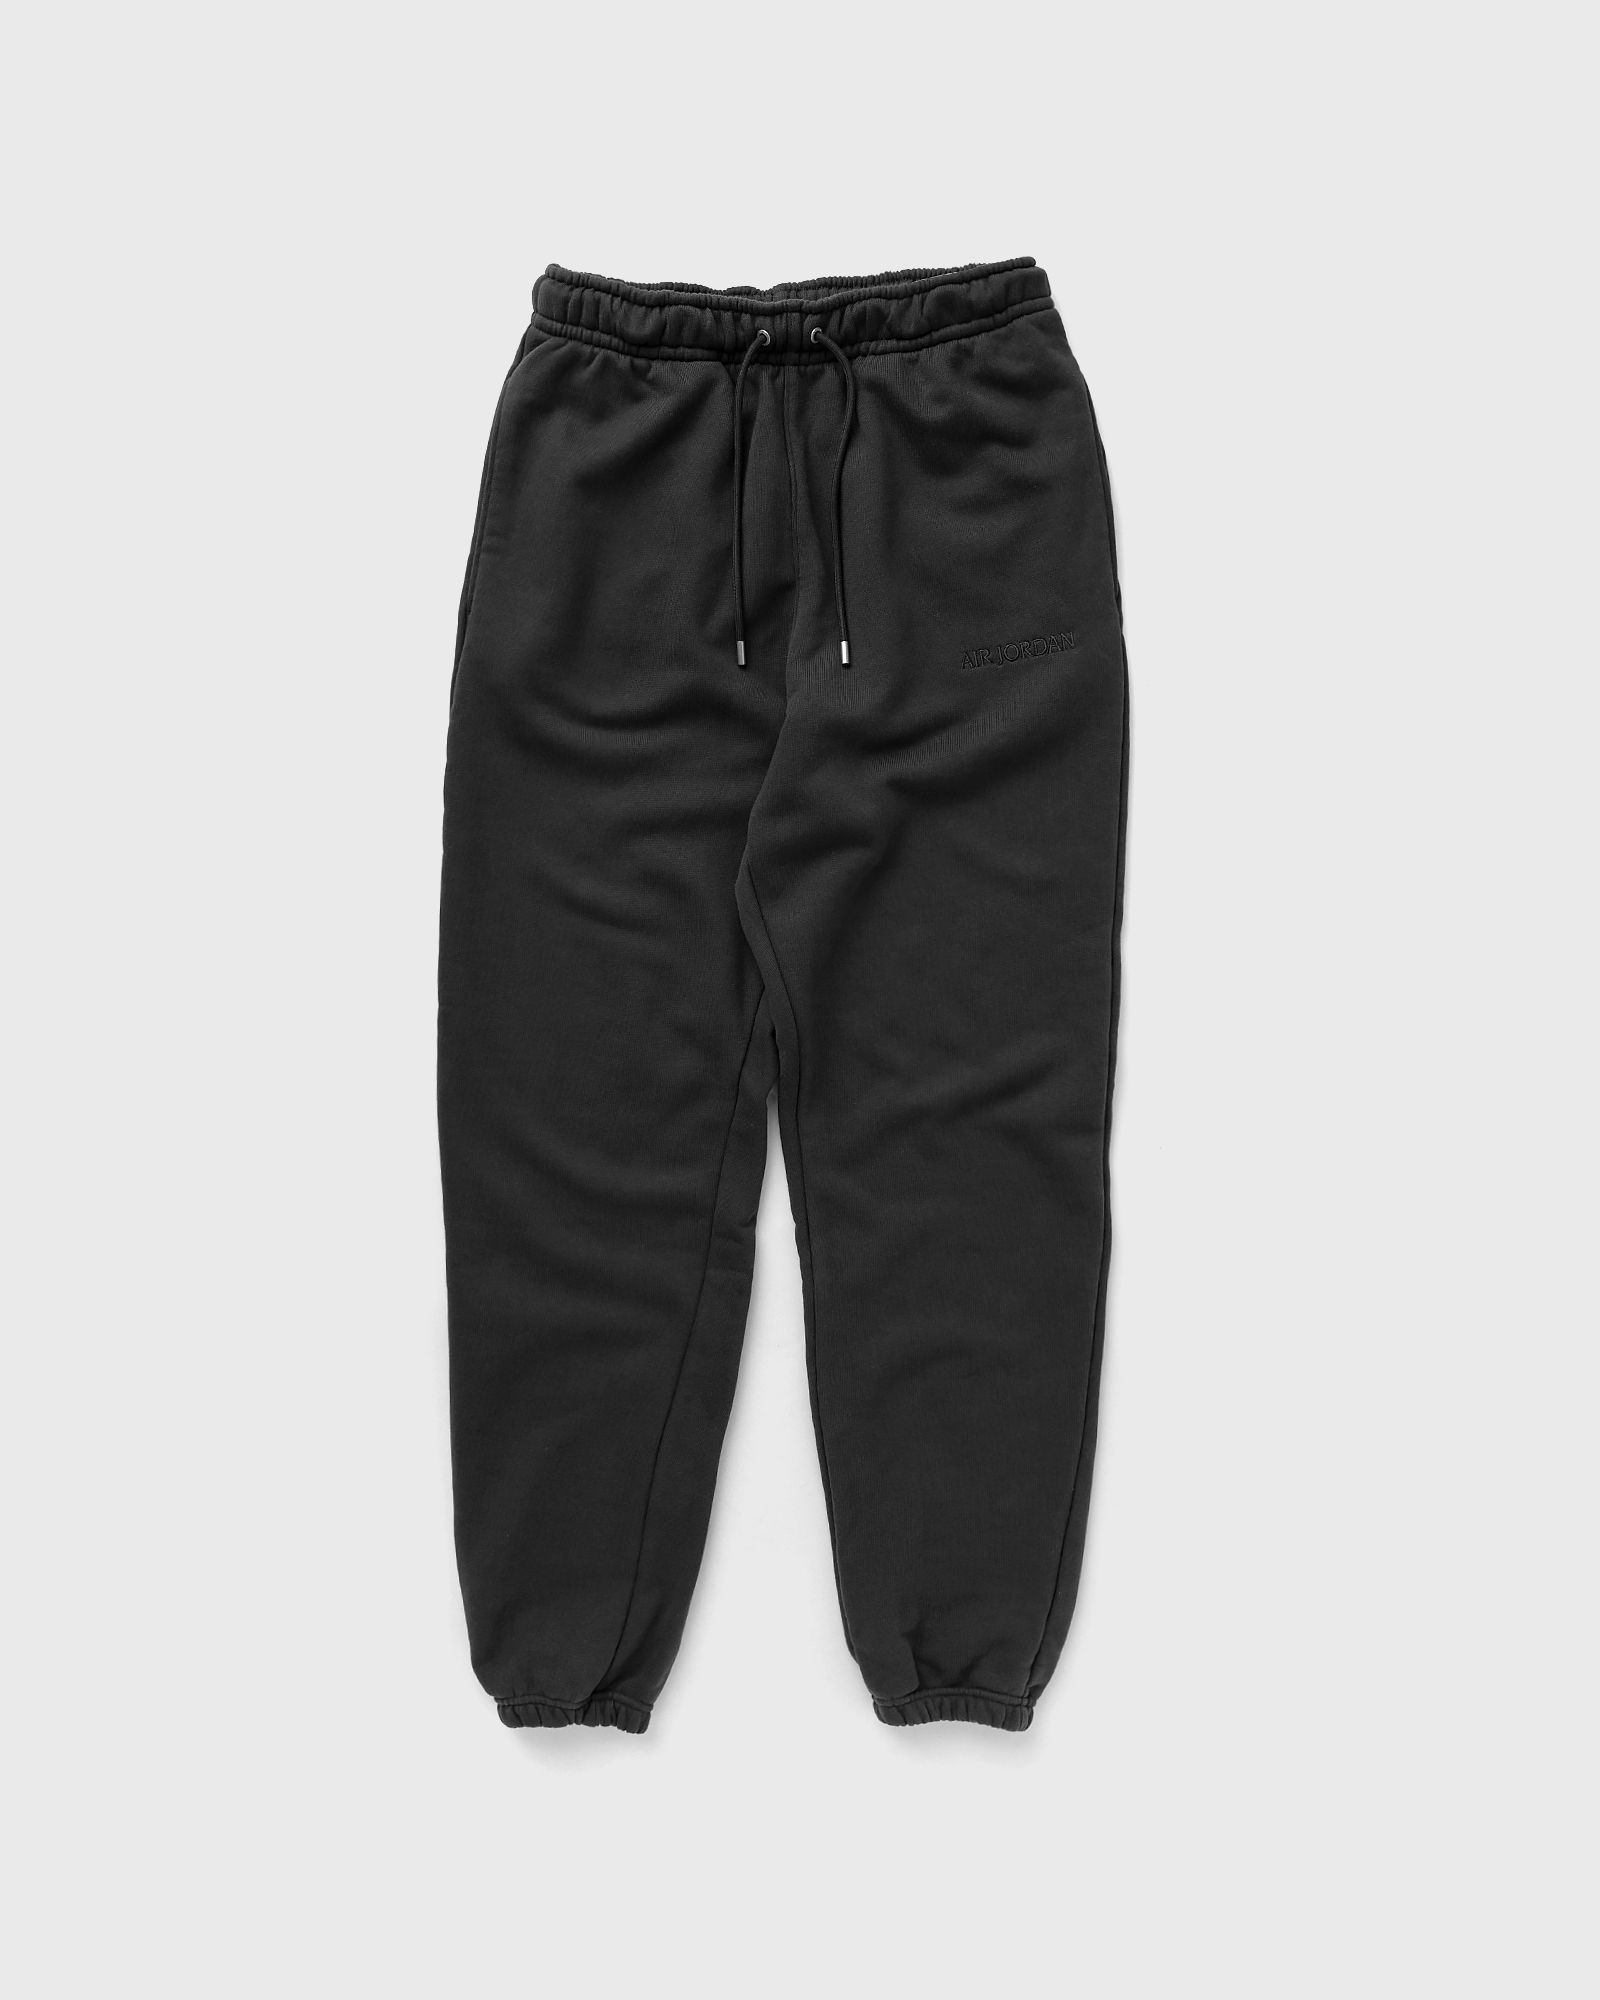 Jordan Air Jordan Wordmark Fleece Pant men Sweatpants black in Größe:XL von Jordan